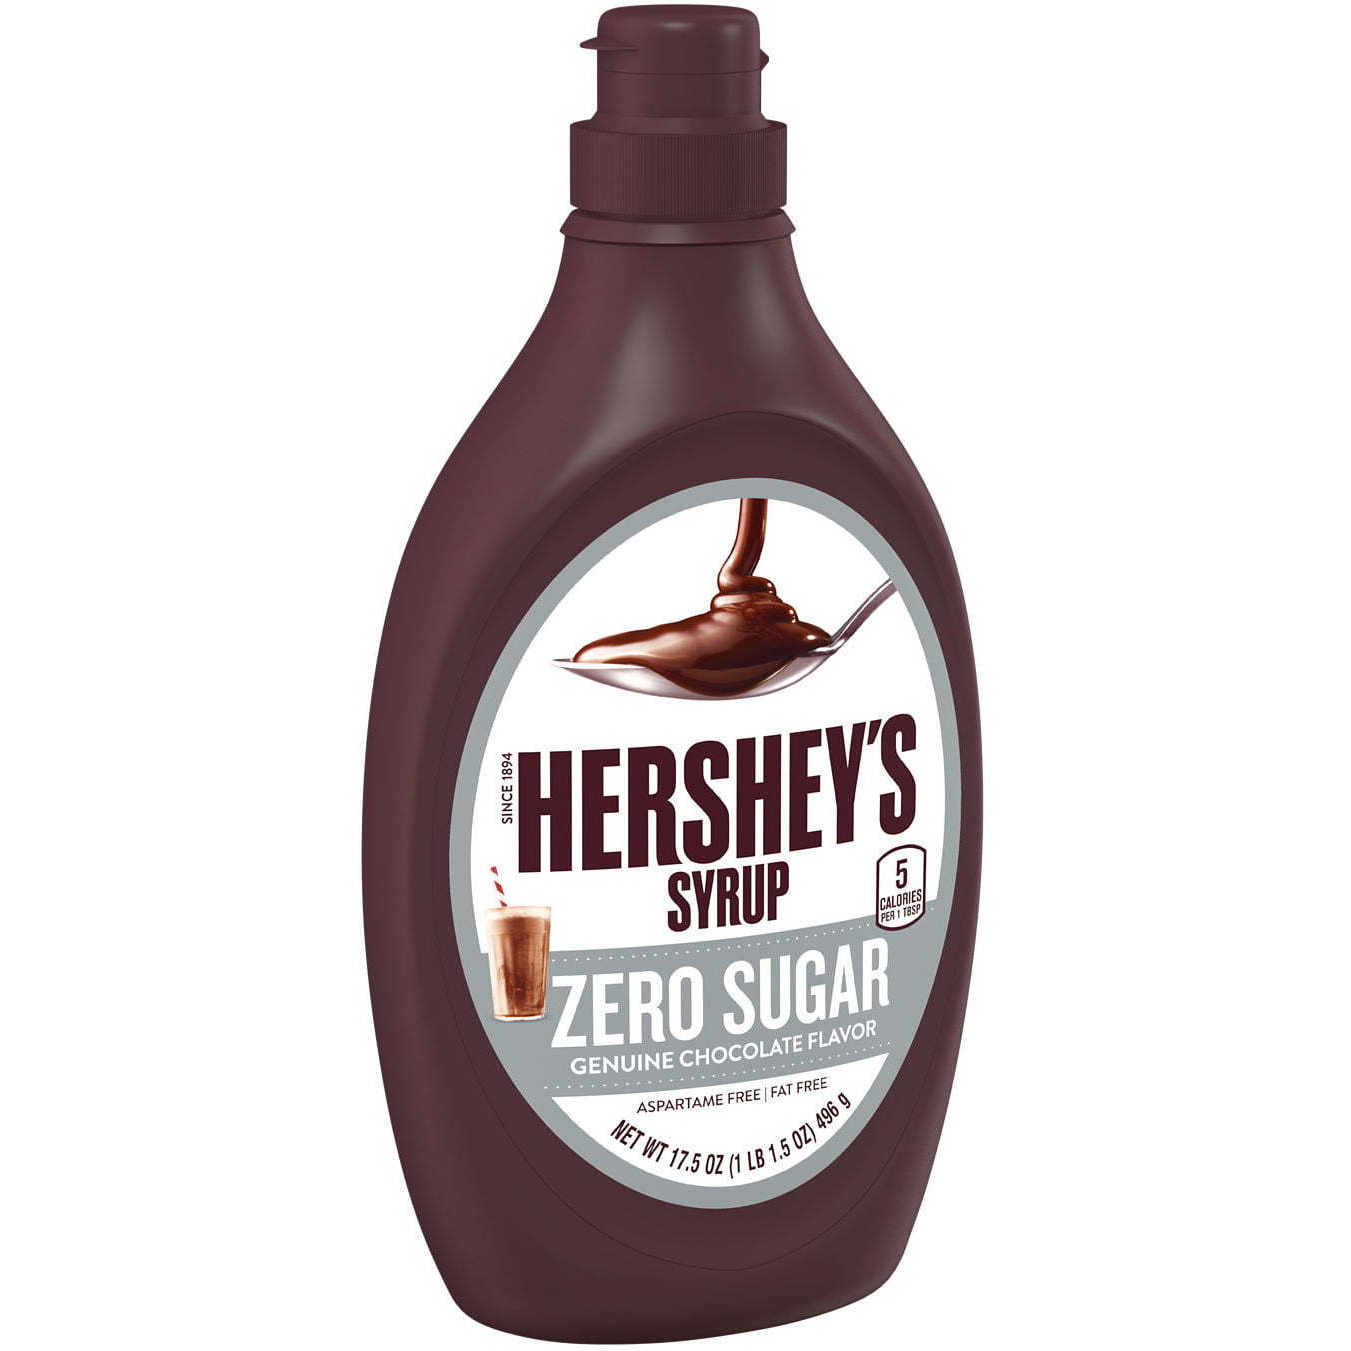 Case of 4 - Hershey's Syrup Chocolate Flavor Zero Sugar - 17.5 Oz (496 Gm) [Fs]